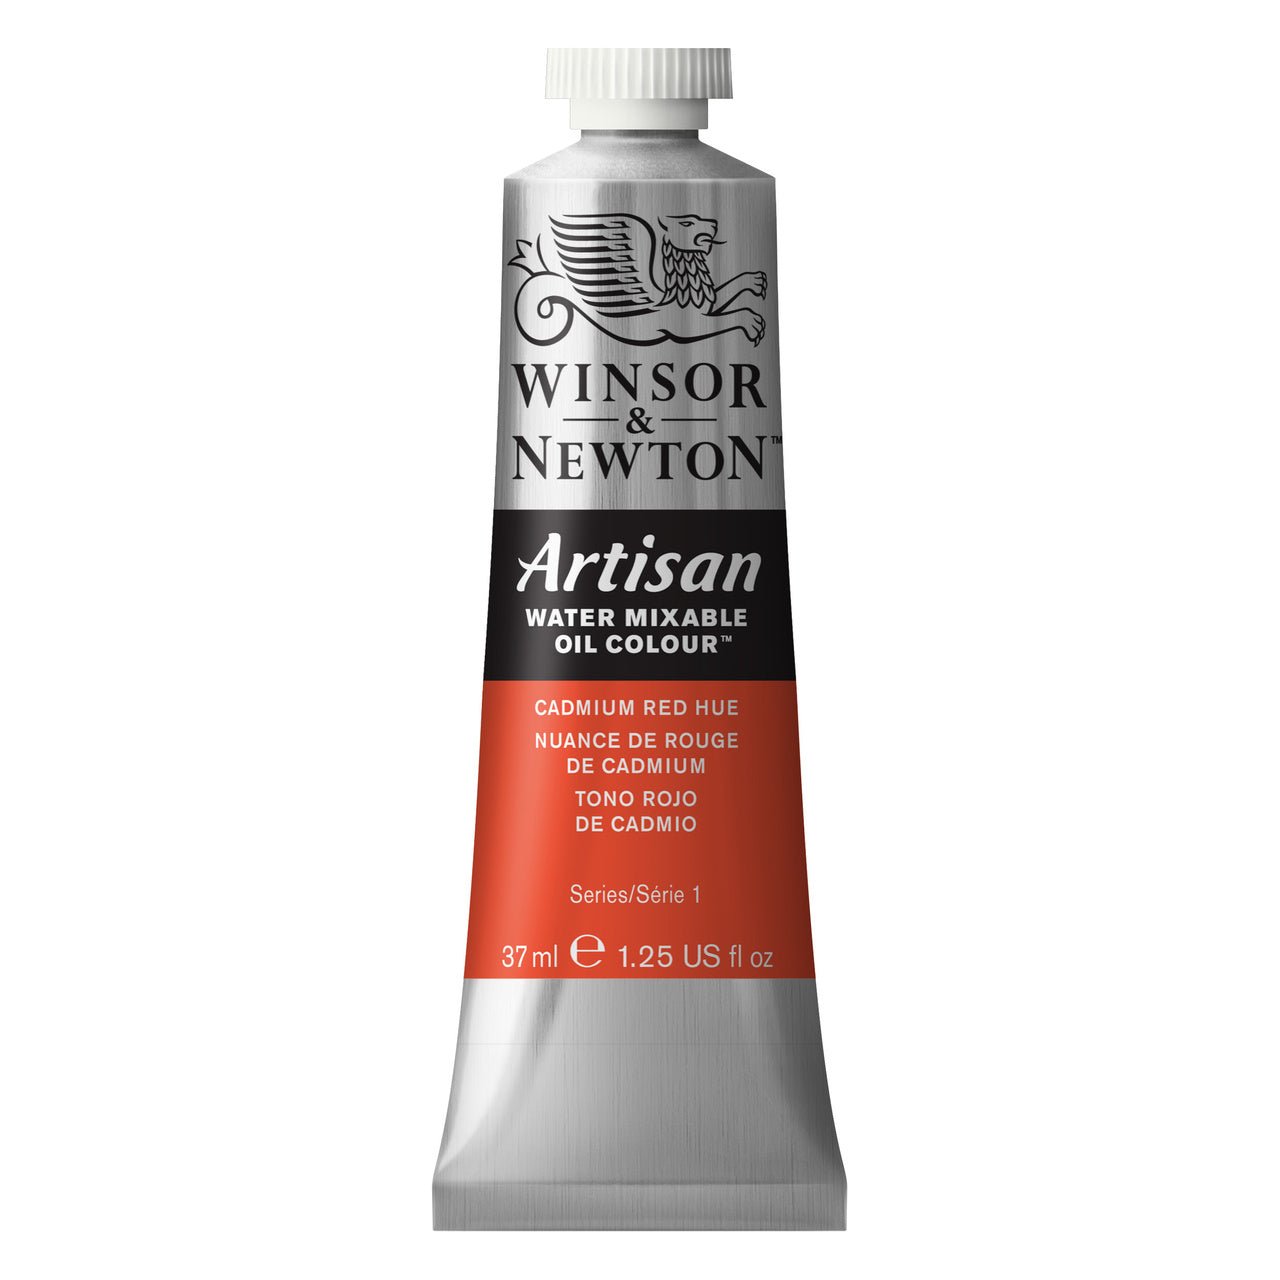 Winsor & Newton Artisan Water Mixable Oil 37ml - Cadmium Red Hue - merriartist.com